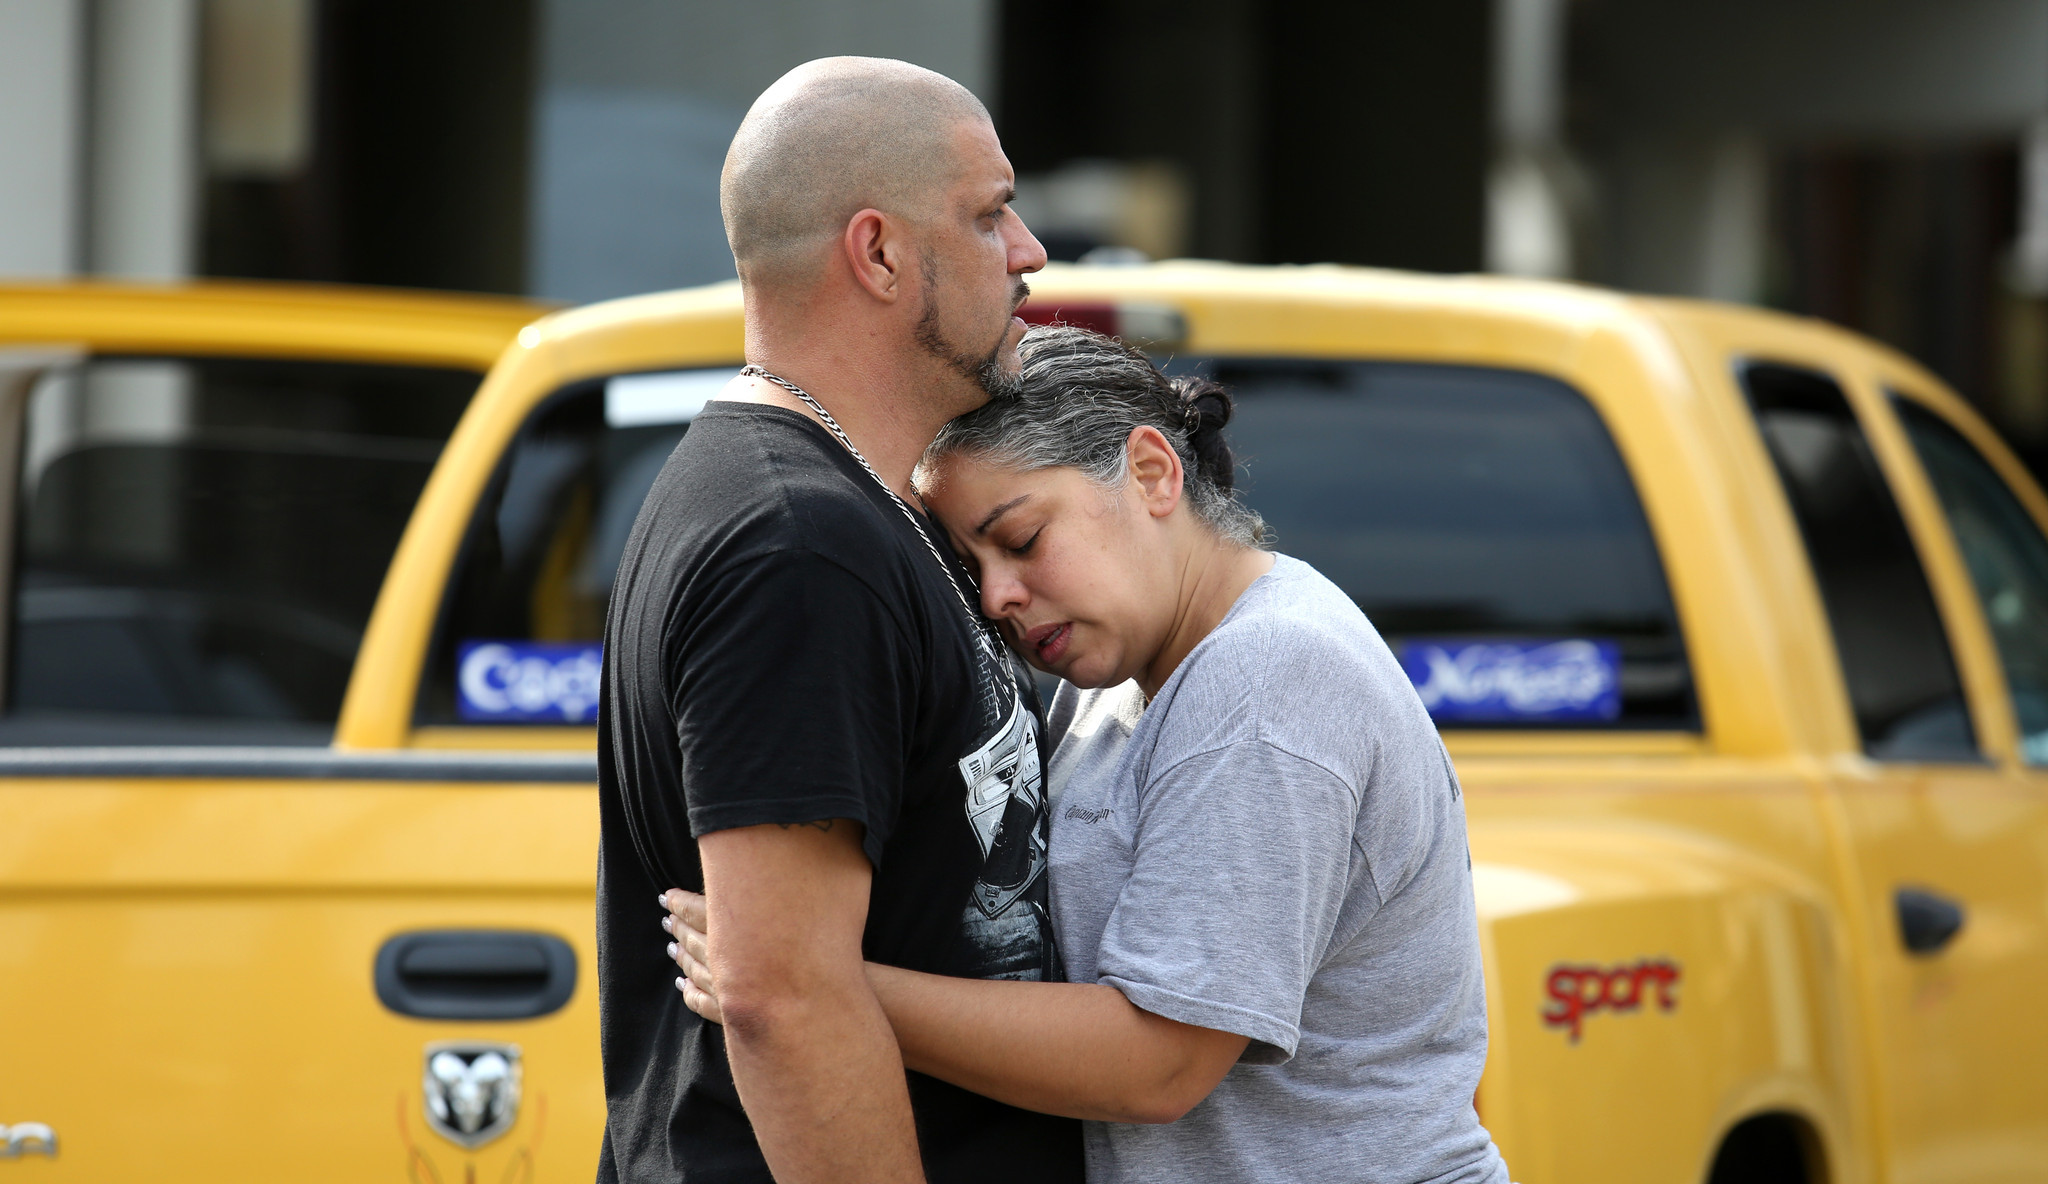  Revelan nombres de 26 víctimas de ataque en Orlando